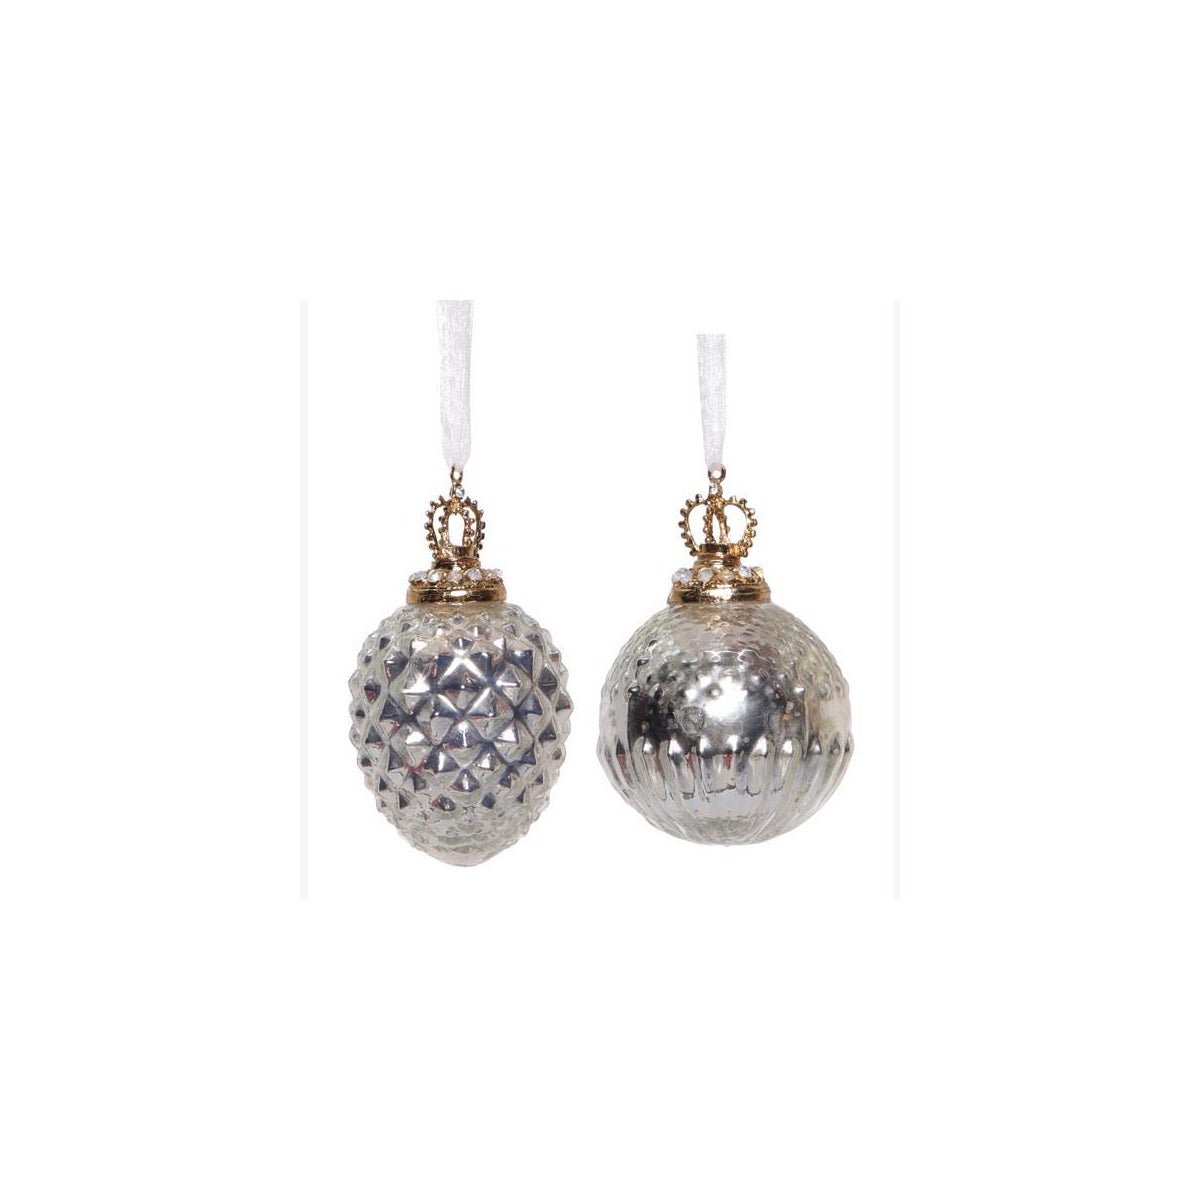 Mercury Glass Christmas Ball Ornaments 2 Ast